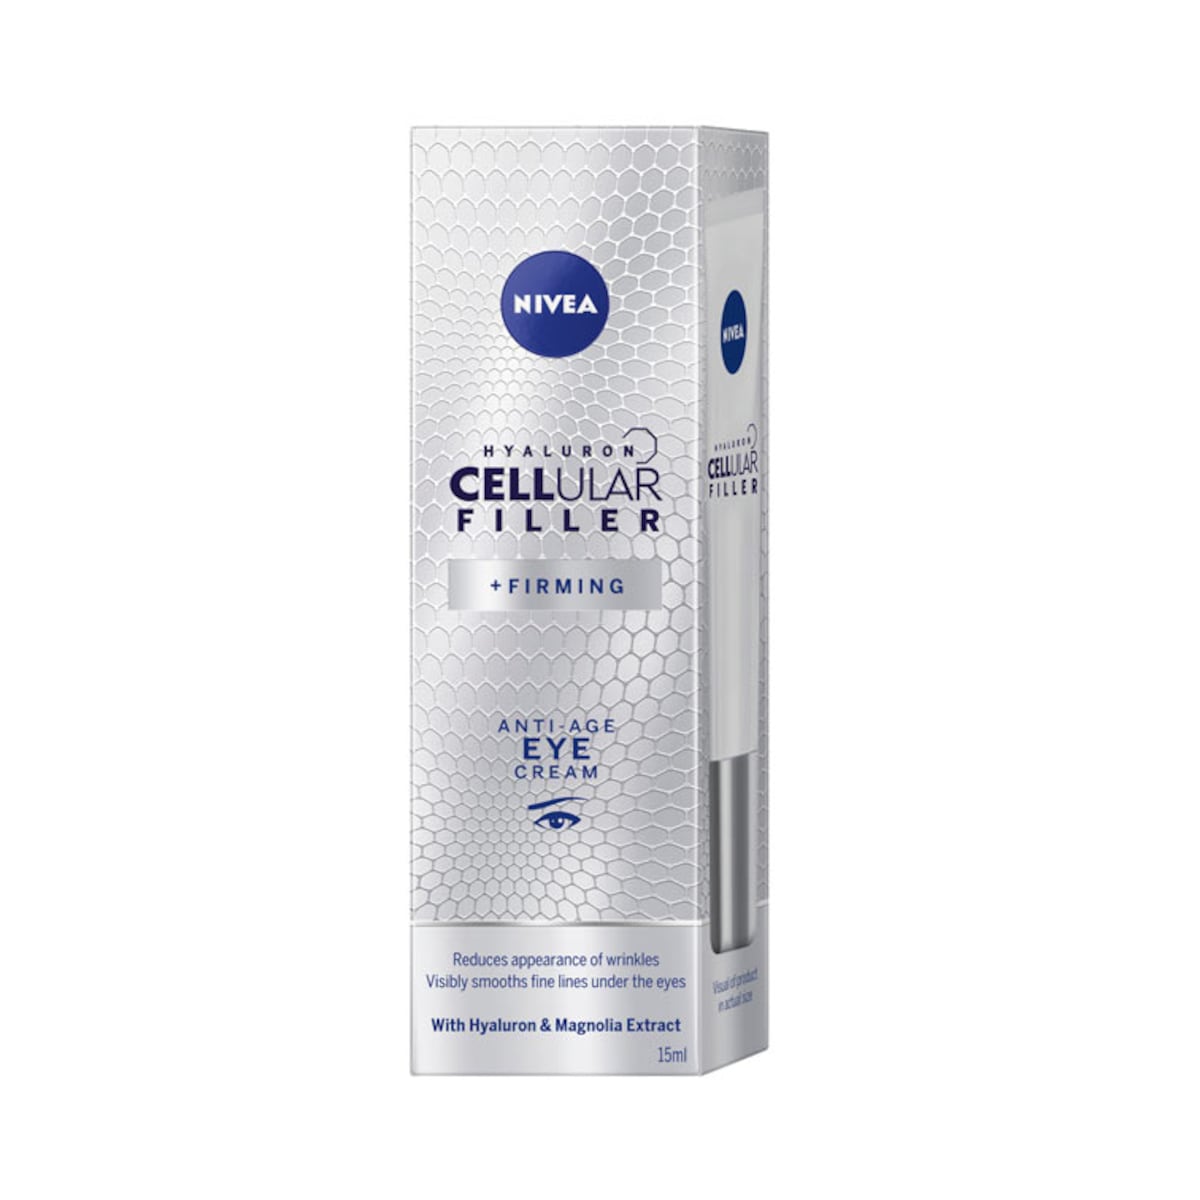 Nivea Hyaluron Cellular Filler Firming Anti-Age Eye Cream 15ml